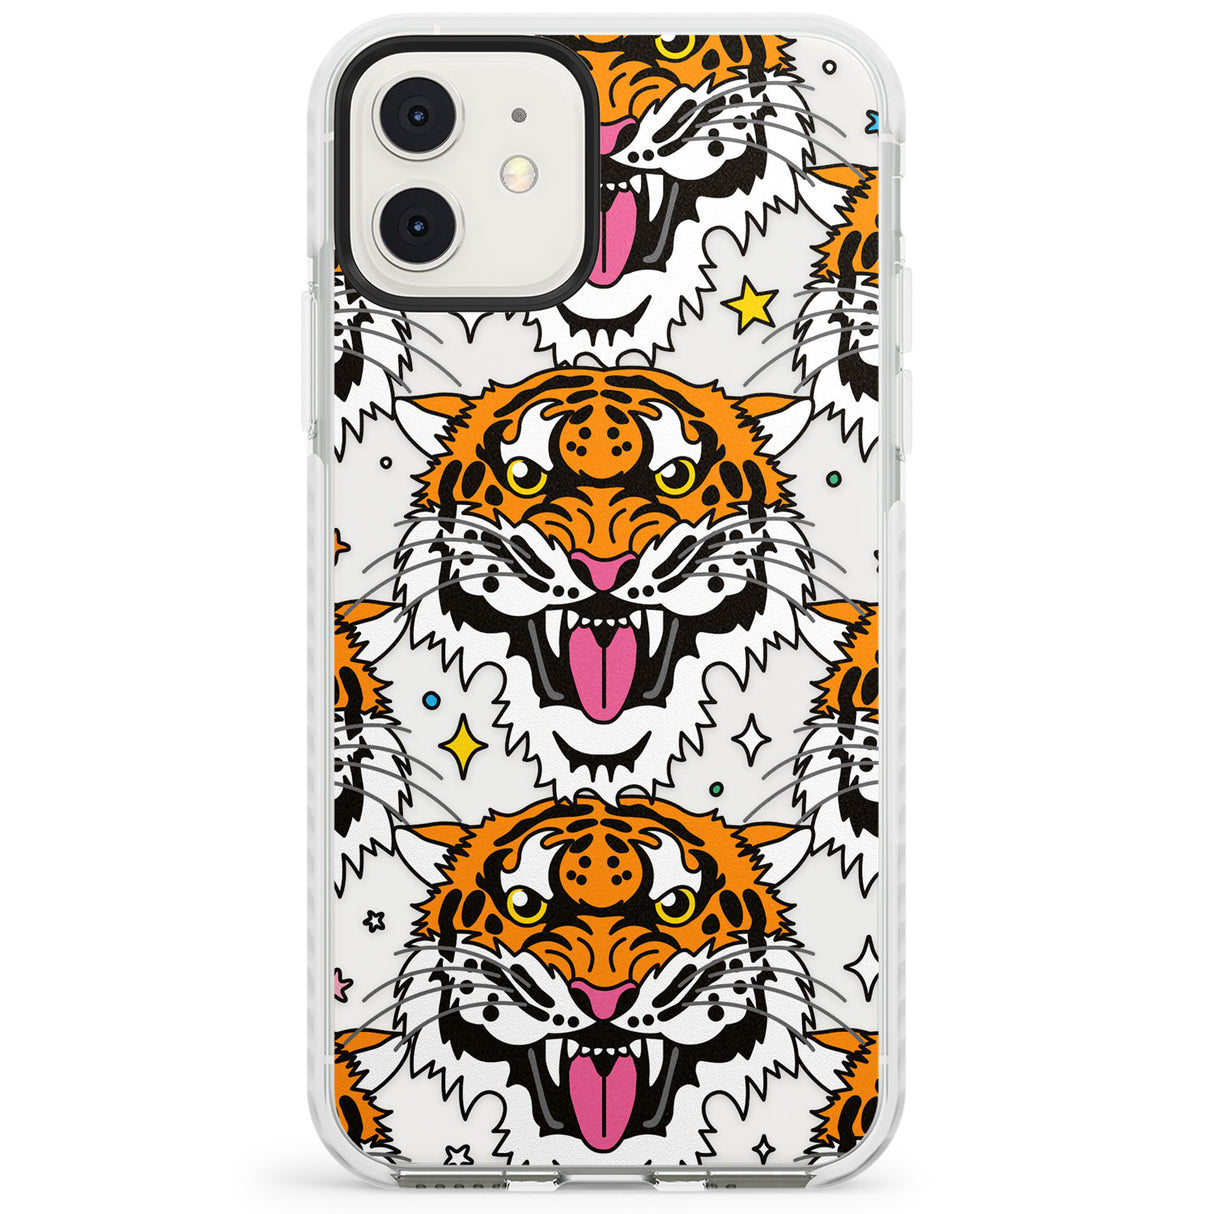 Fierce Jungle Tigers Impact Phone Case for iPhone 11, iphone 12